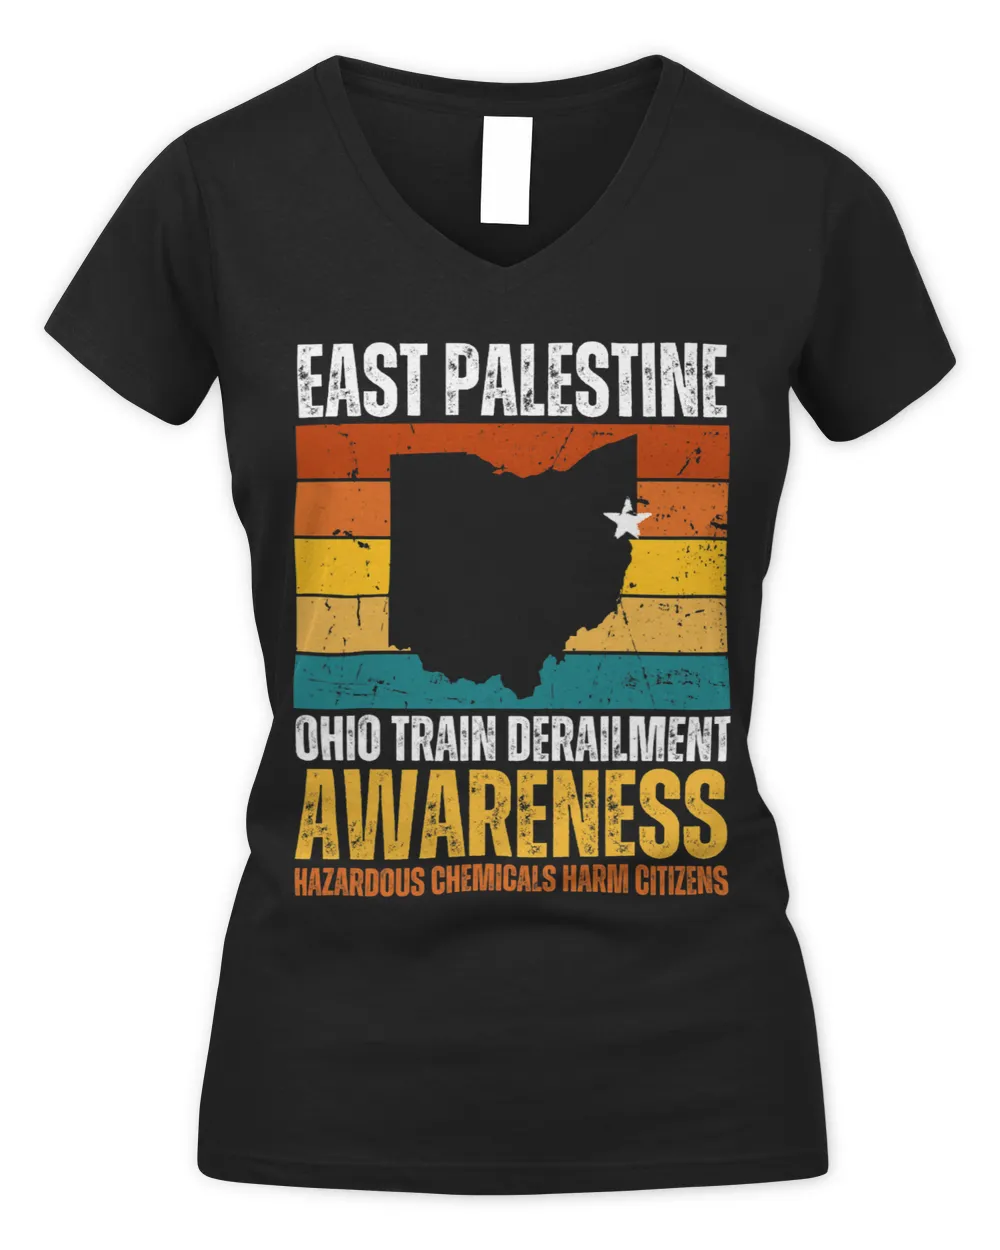 East Palestine Ohio Train Derailment Awareness